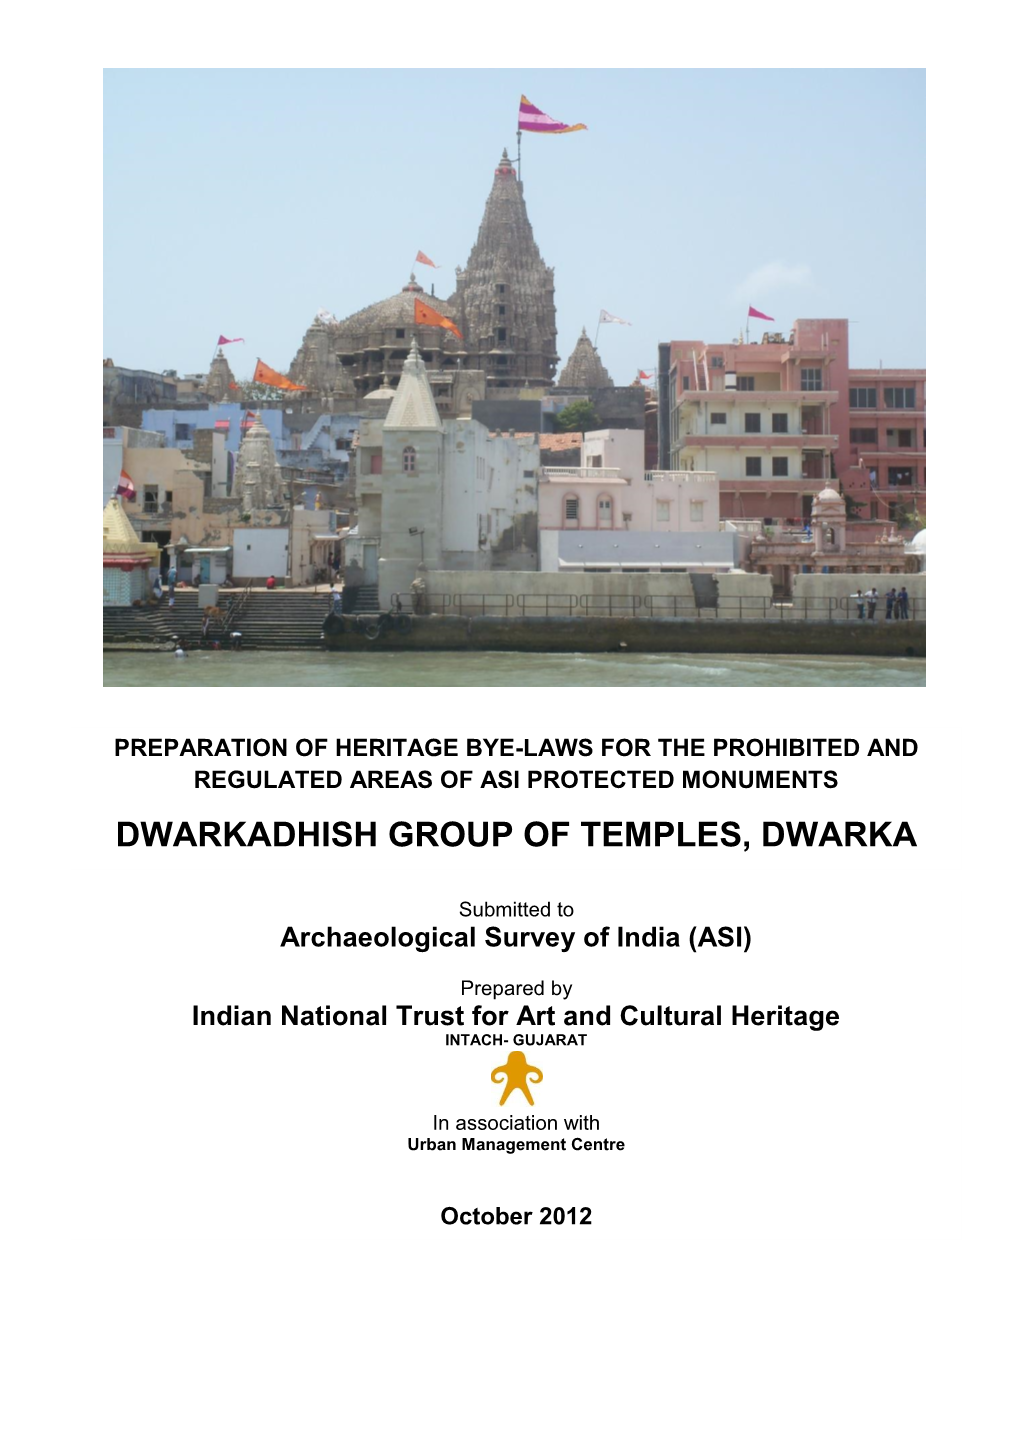 Dwarkadhish Group of Temples, Dwarka